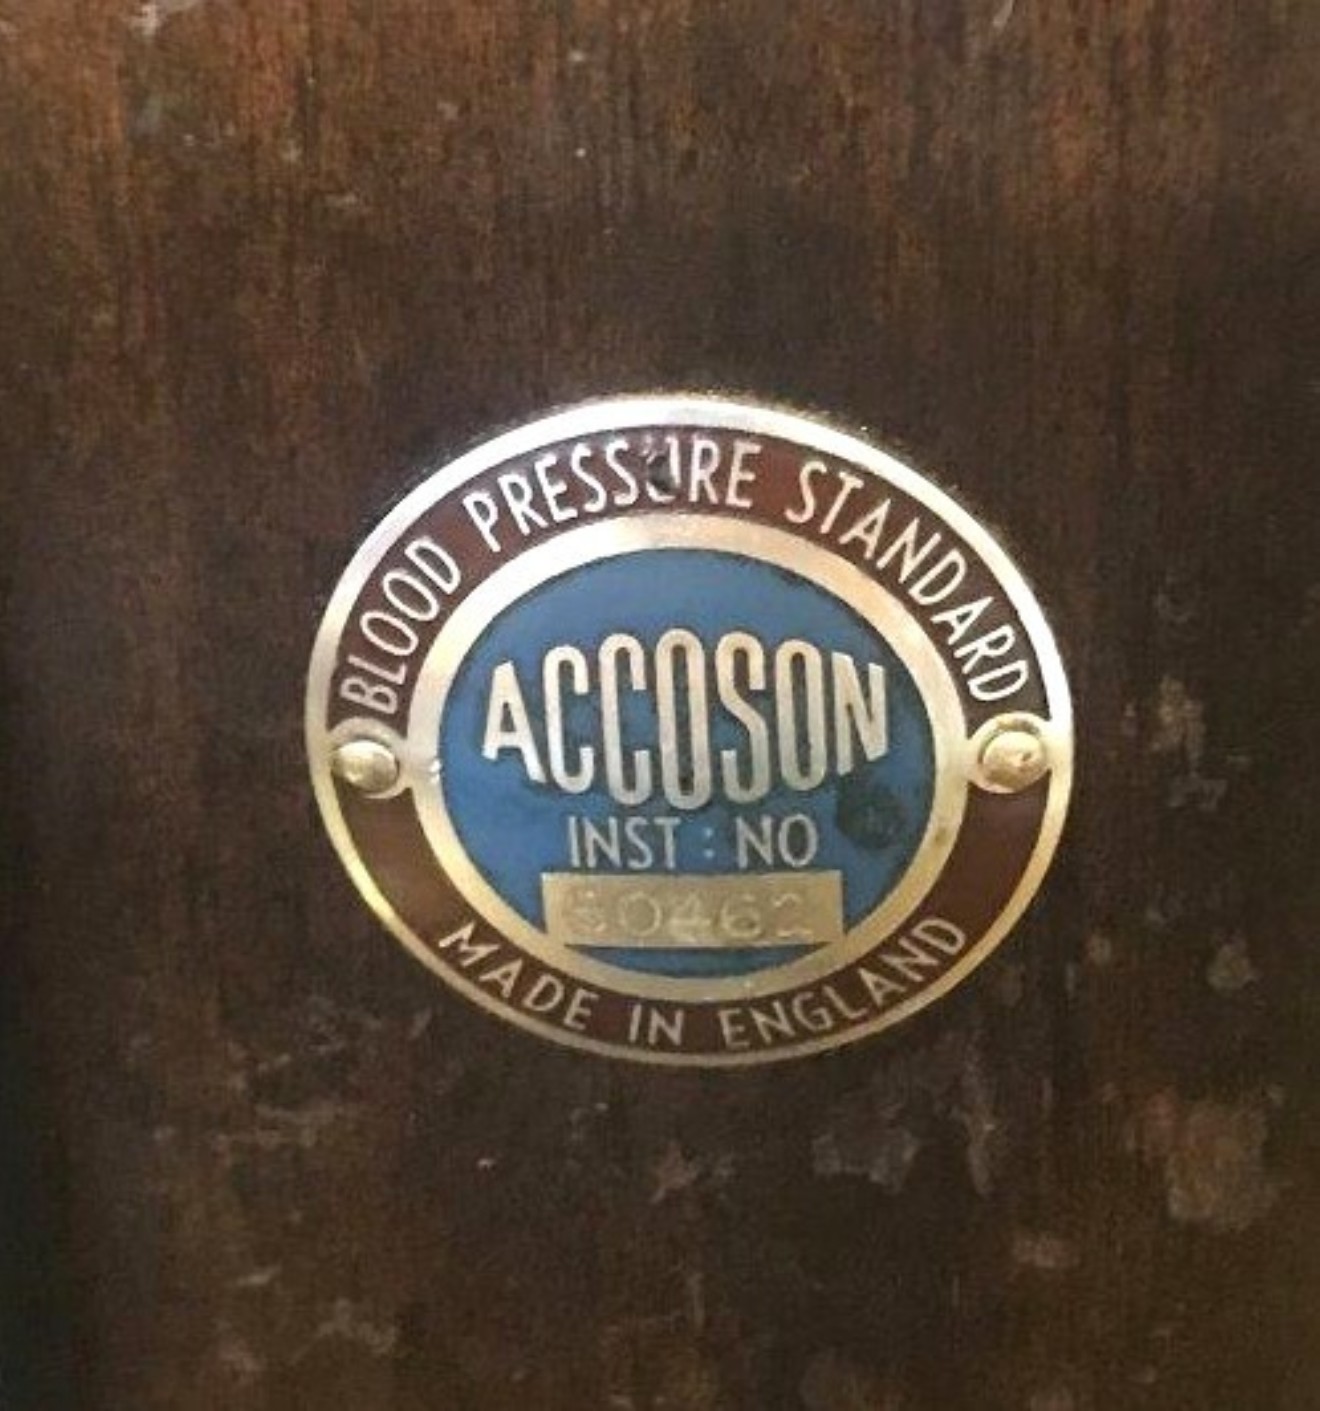 Vintage Accoson Blood Pressure Standard Sphygmomanometer in Wooden Jointed Case